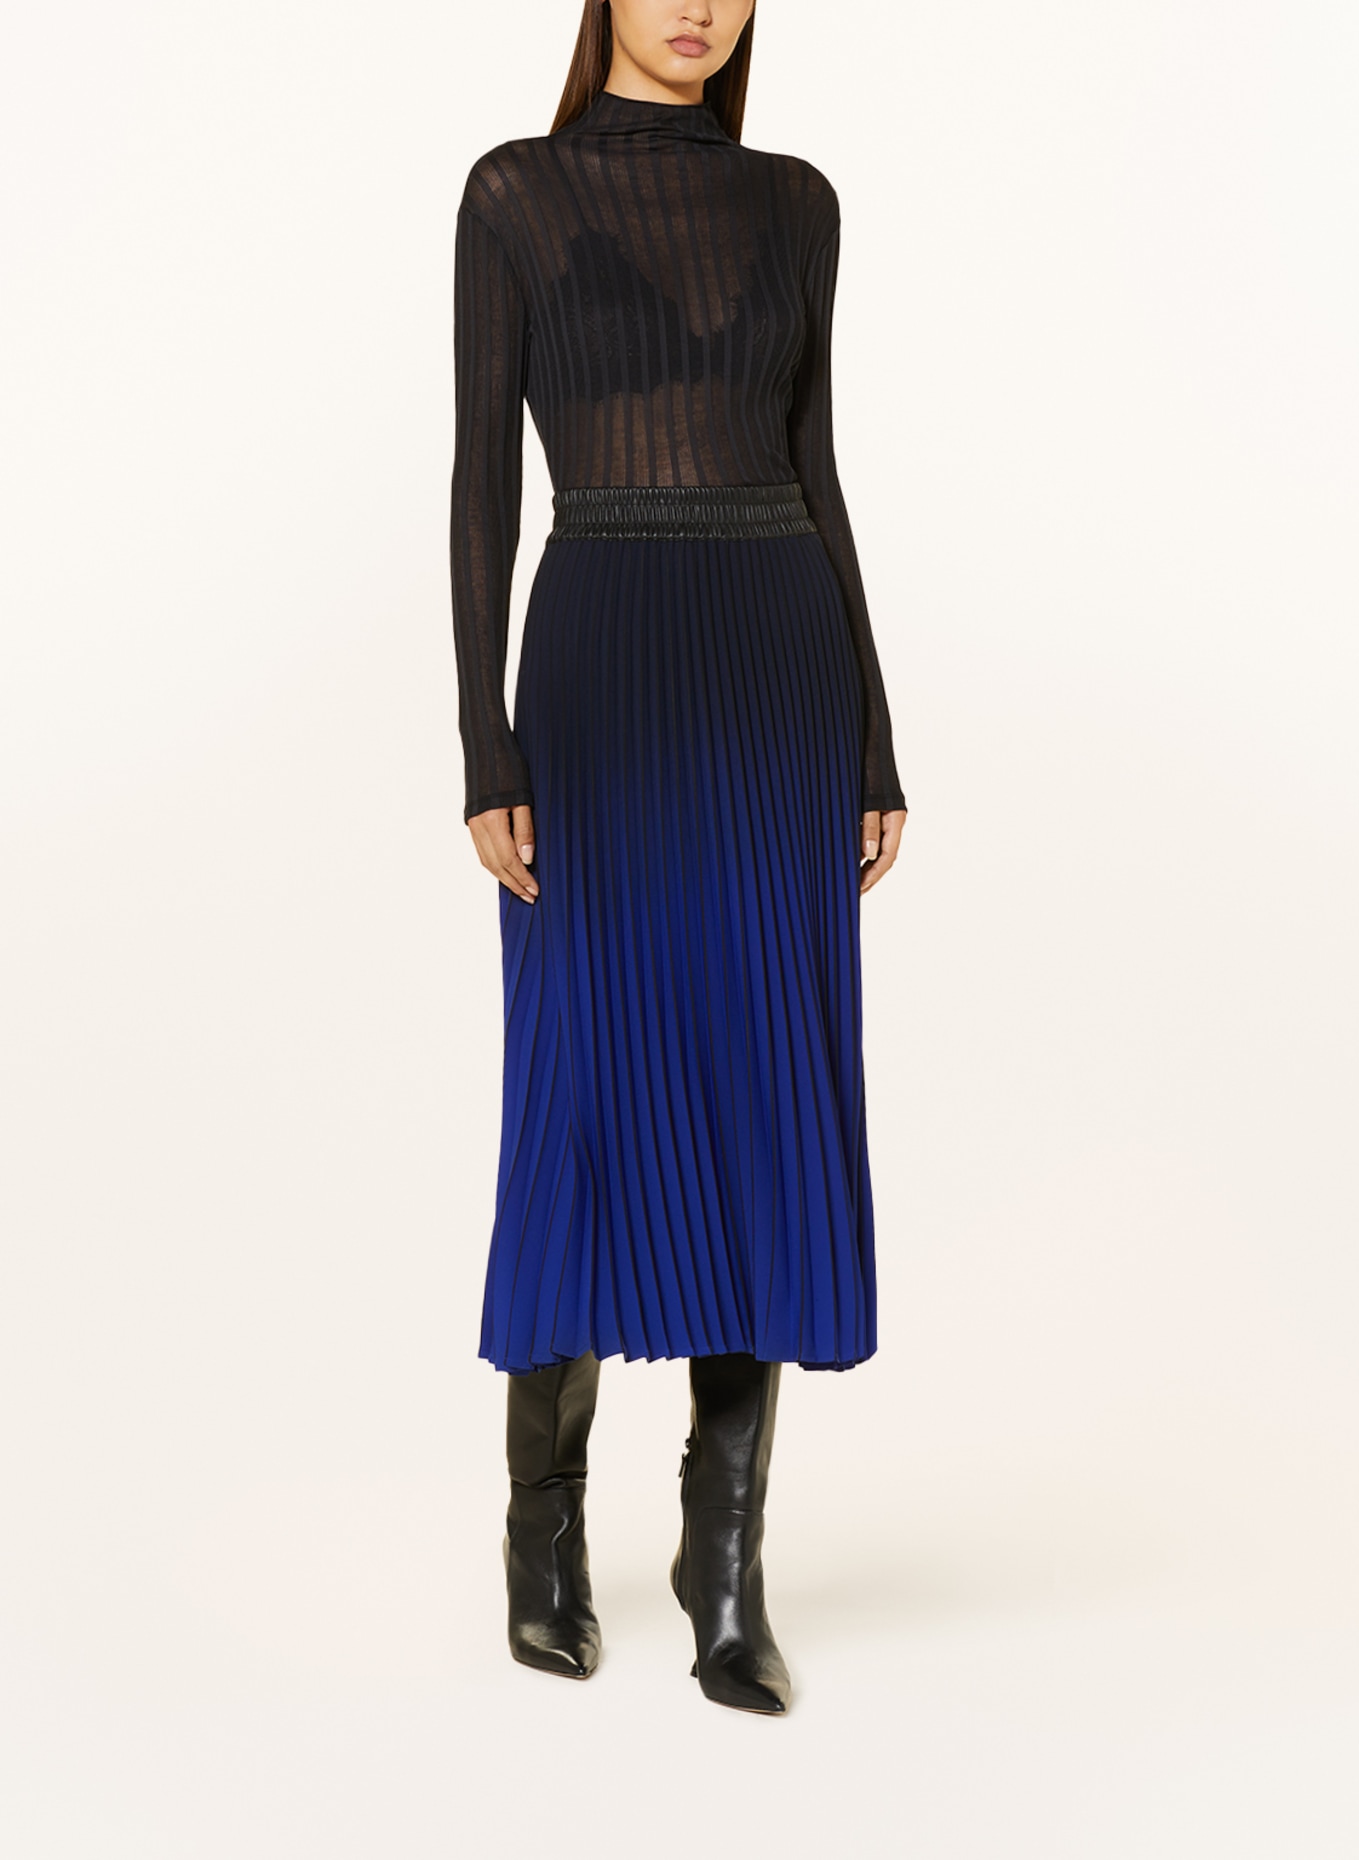 RIANI Sweater, Color: BLACK (Image 2)